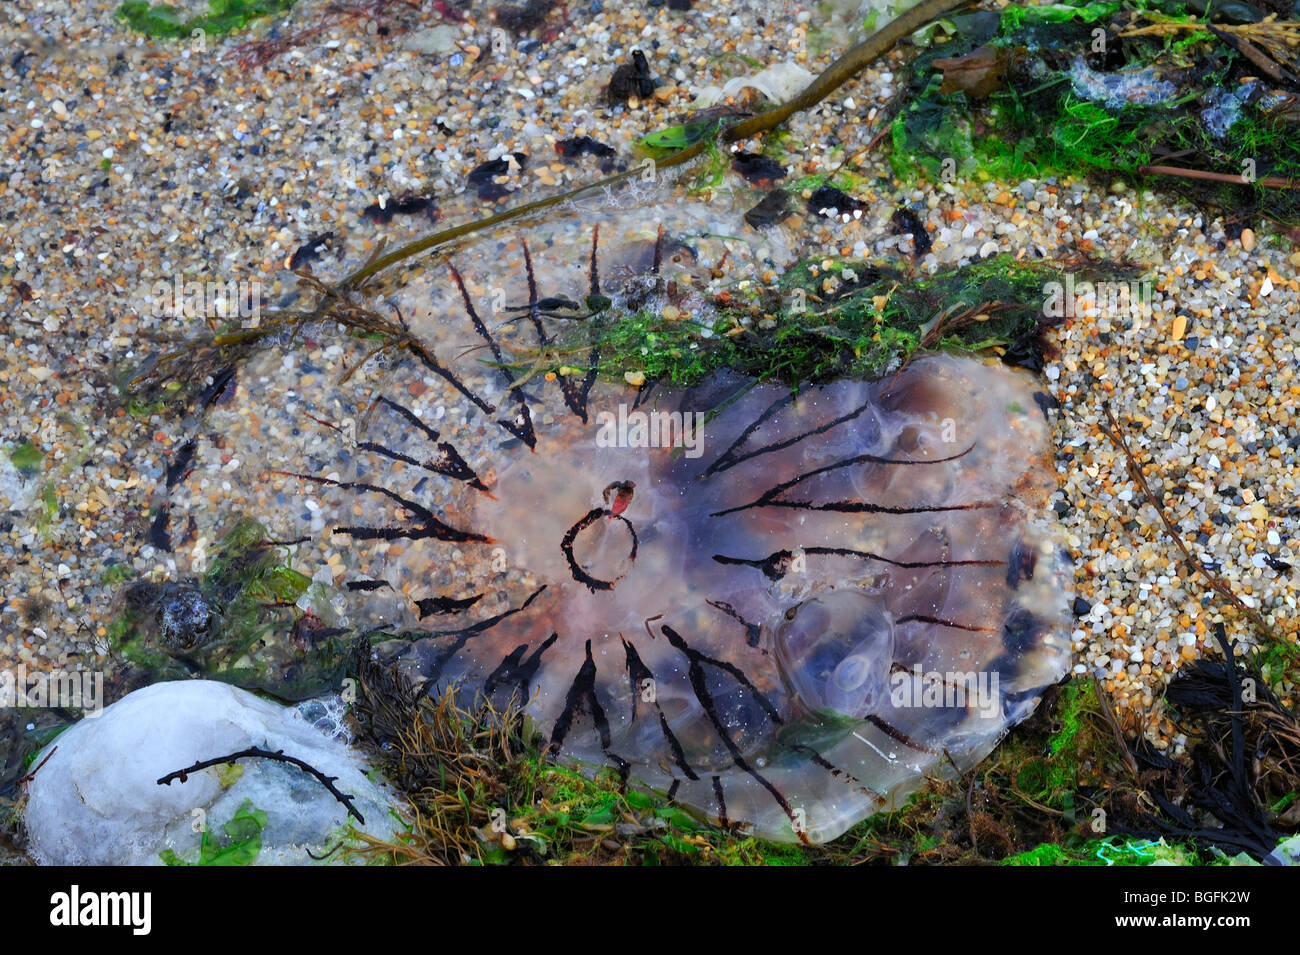 Compass jellyfish (Chrysaora hysoscella) washed ashore on beach Stock Photo